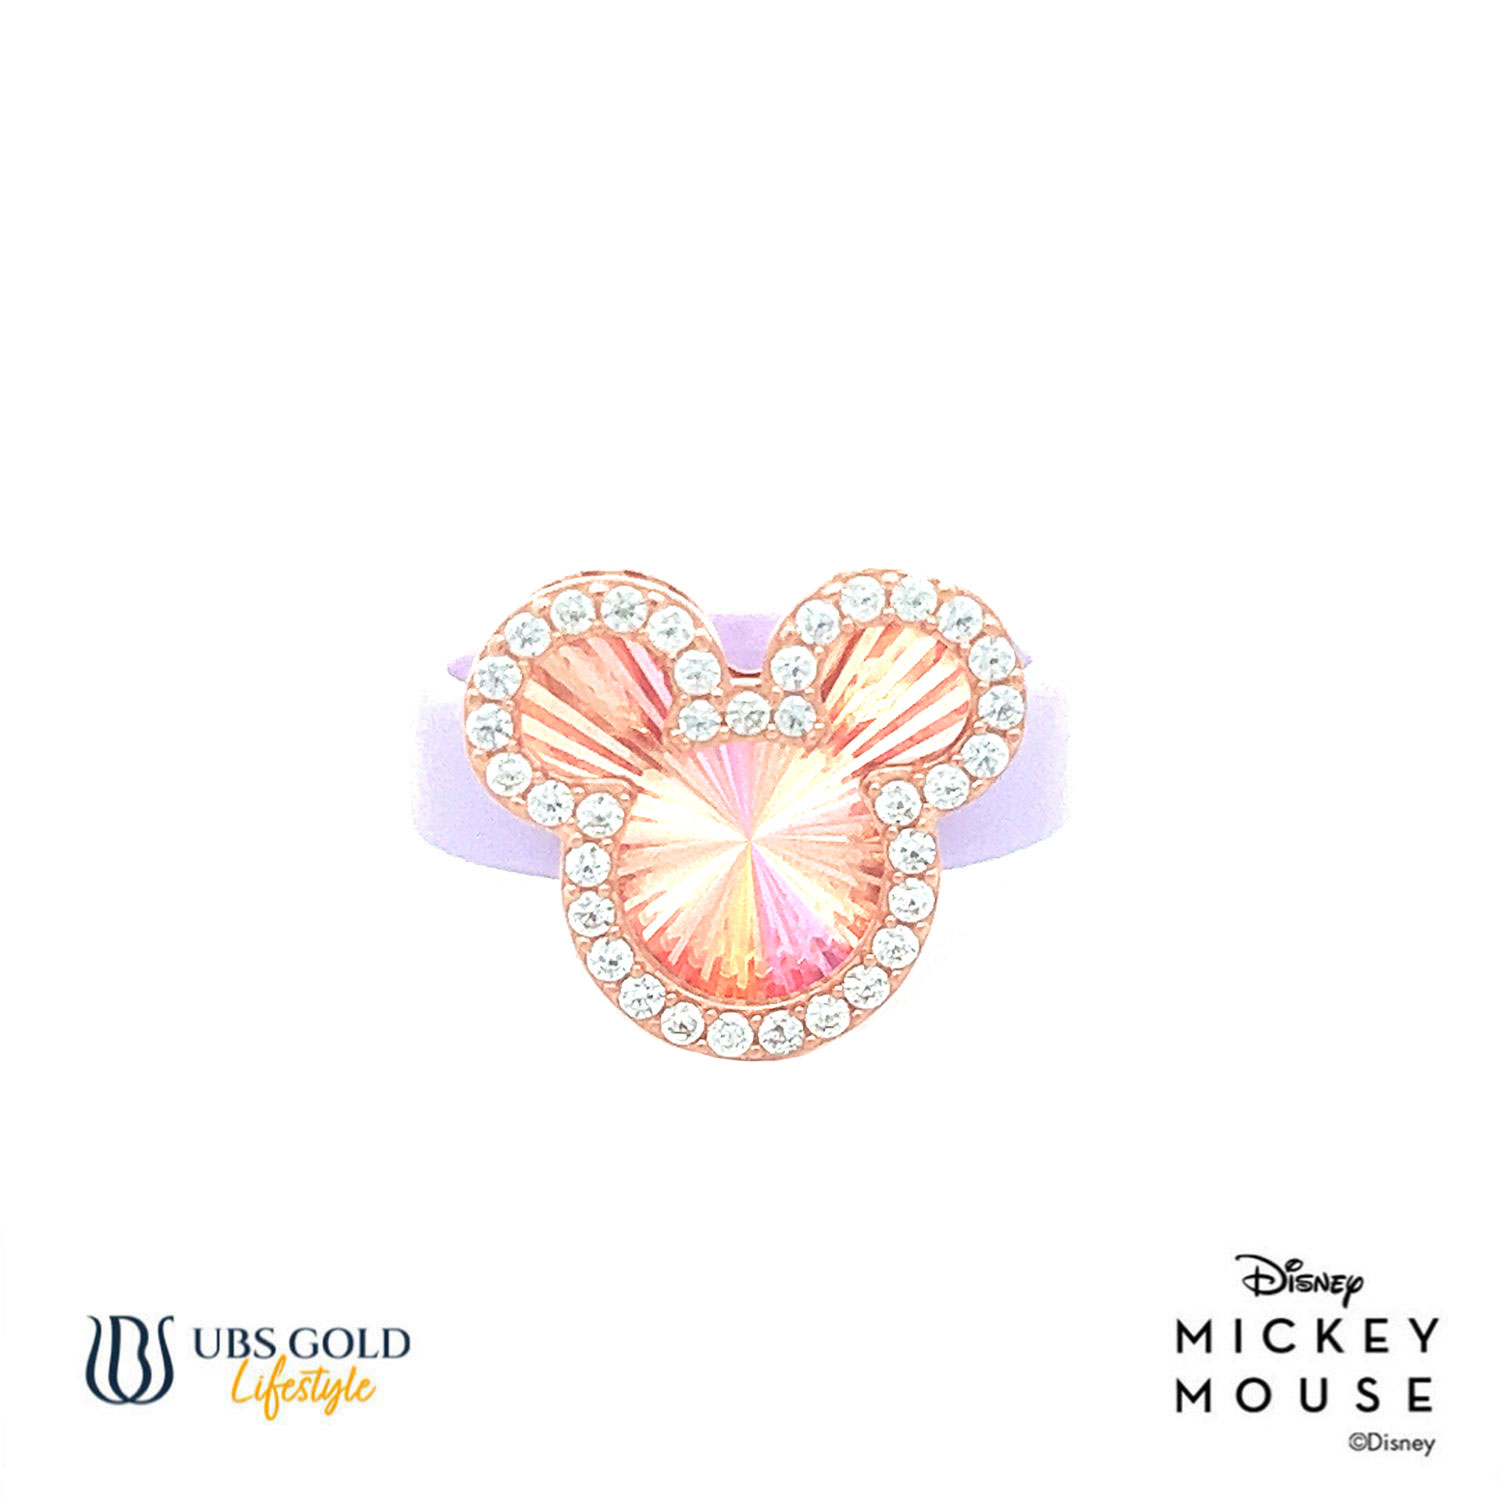 UBS Gold Cincin Emas Disney Mickey Mouse Rainbow - Ccy0189U - 17K